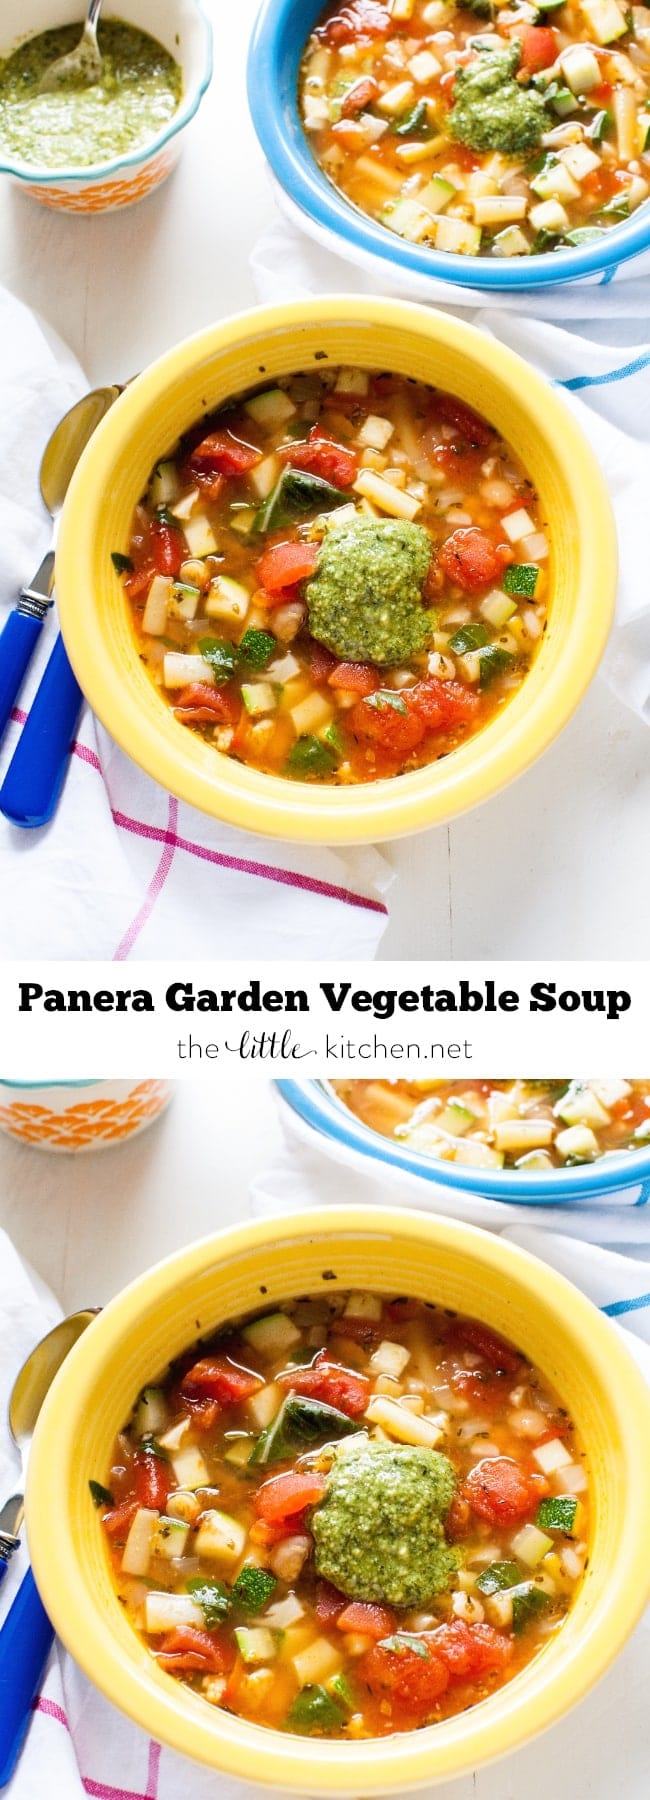 Panera Vegetable Soup from thelittlekitchen.net